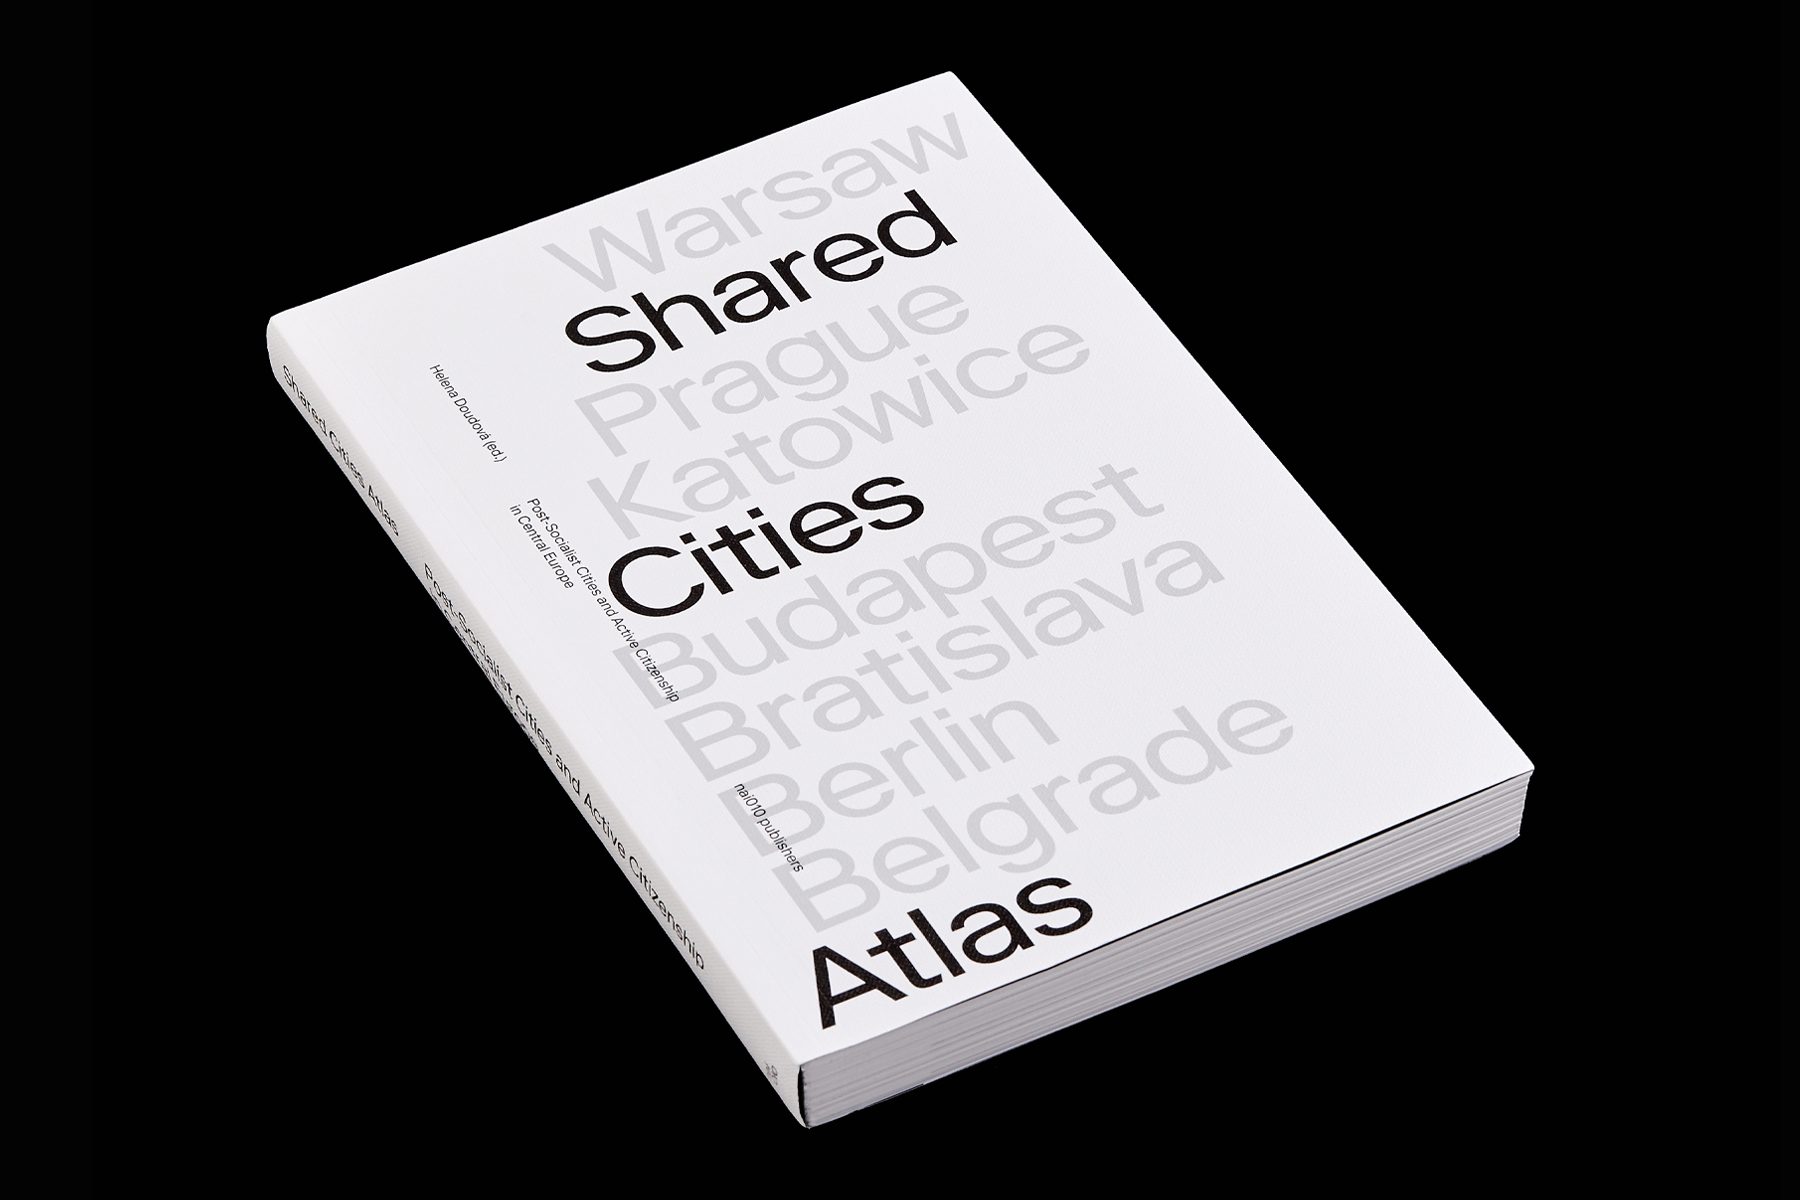 Shared-Cities-Atlas_2019_Dimitri-Jeannottat_1800x1200_0